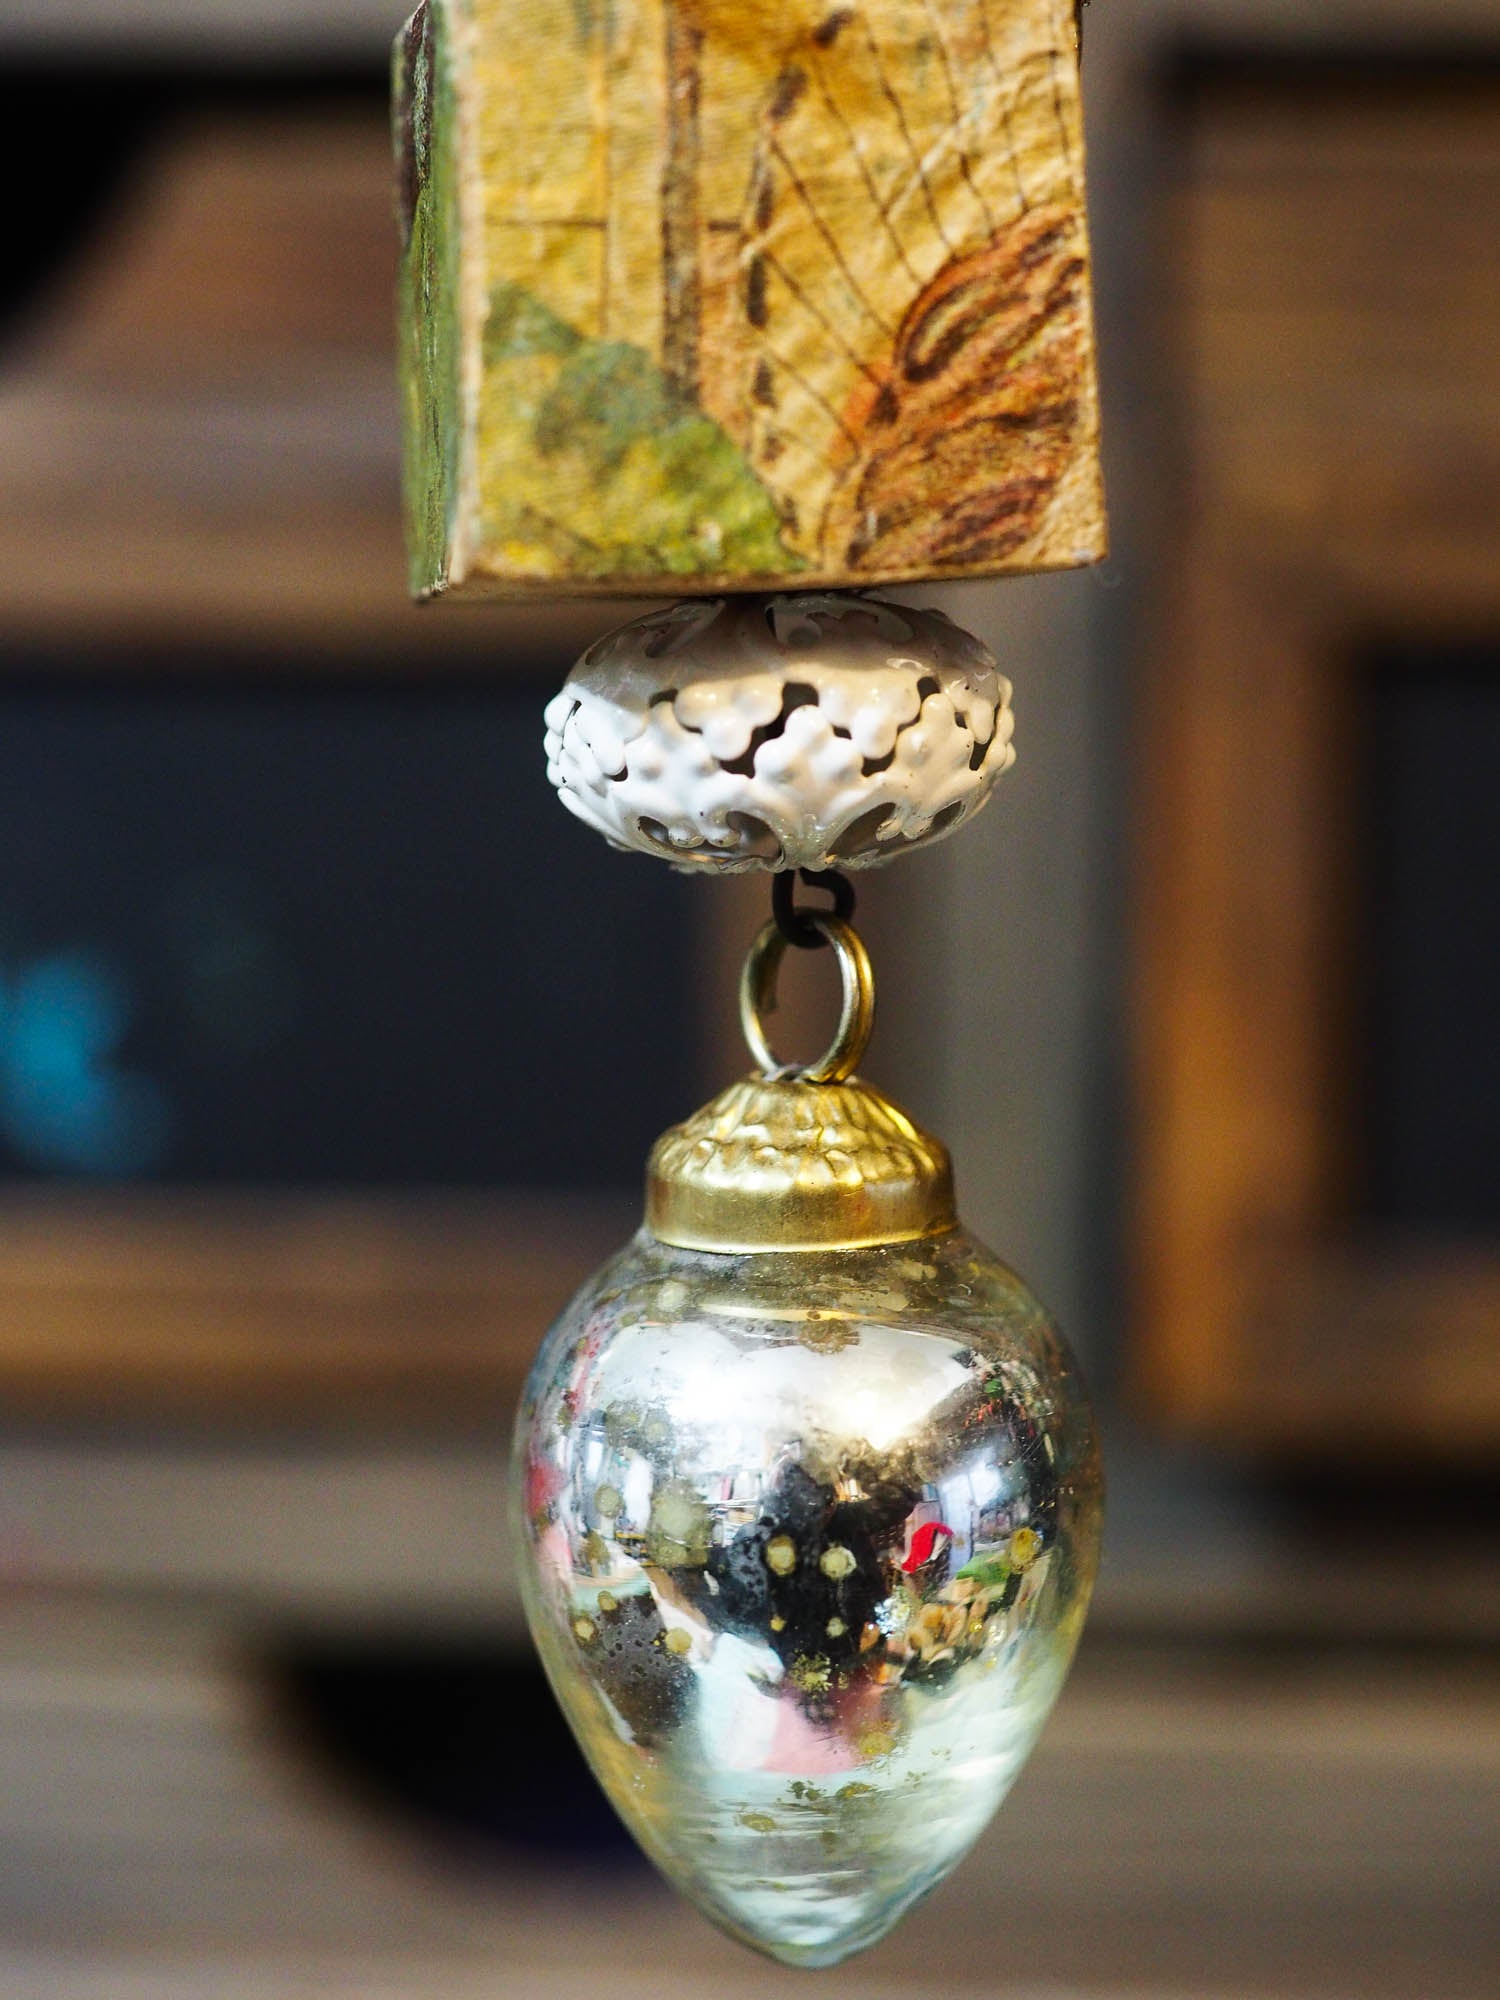 ANGEL No. 8 - An original handmade Christmas tree ornament by Danita, Original Art by Danita Art